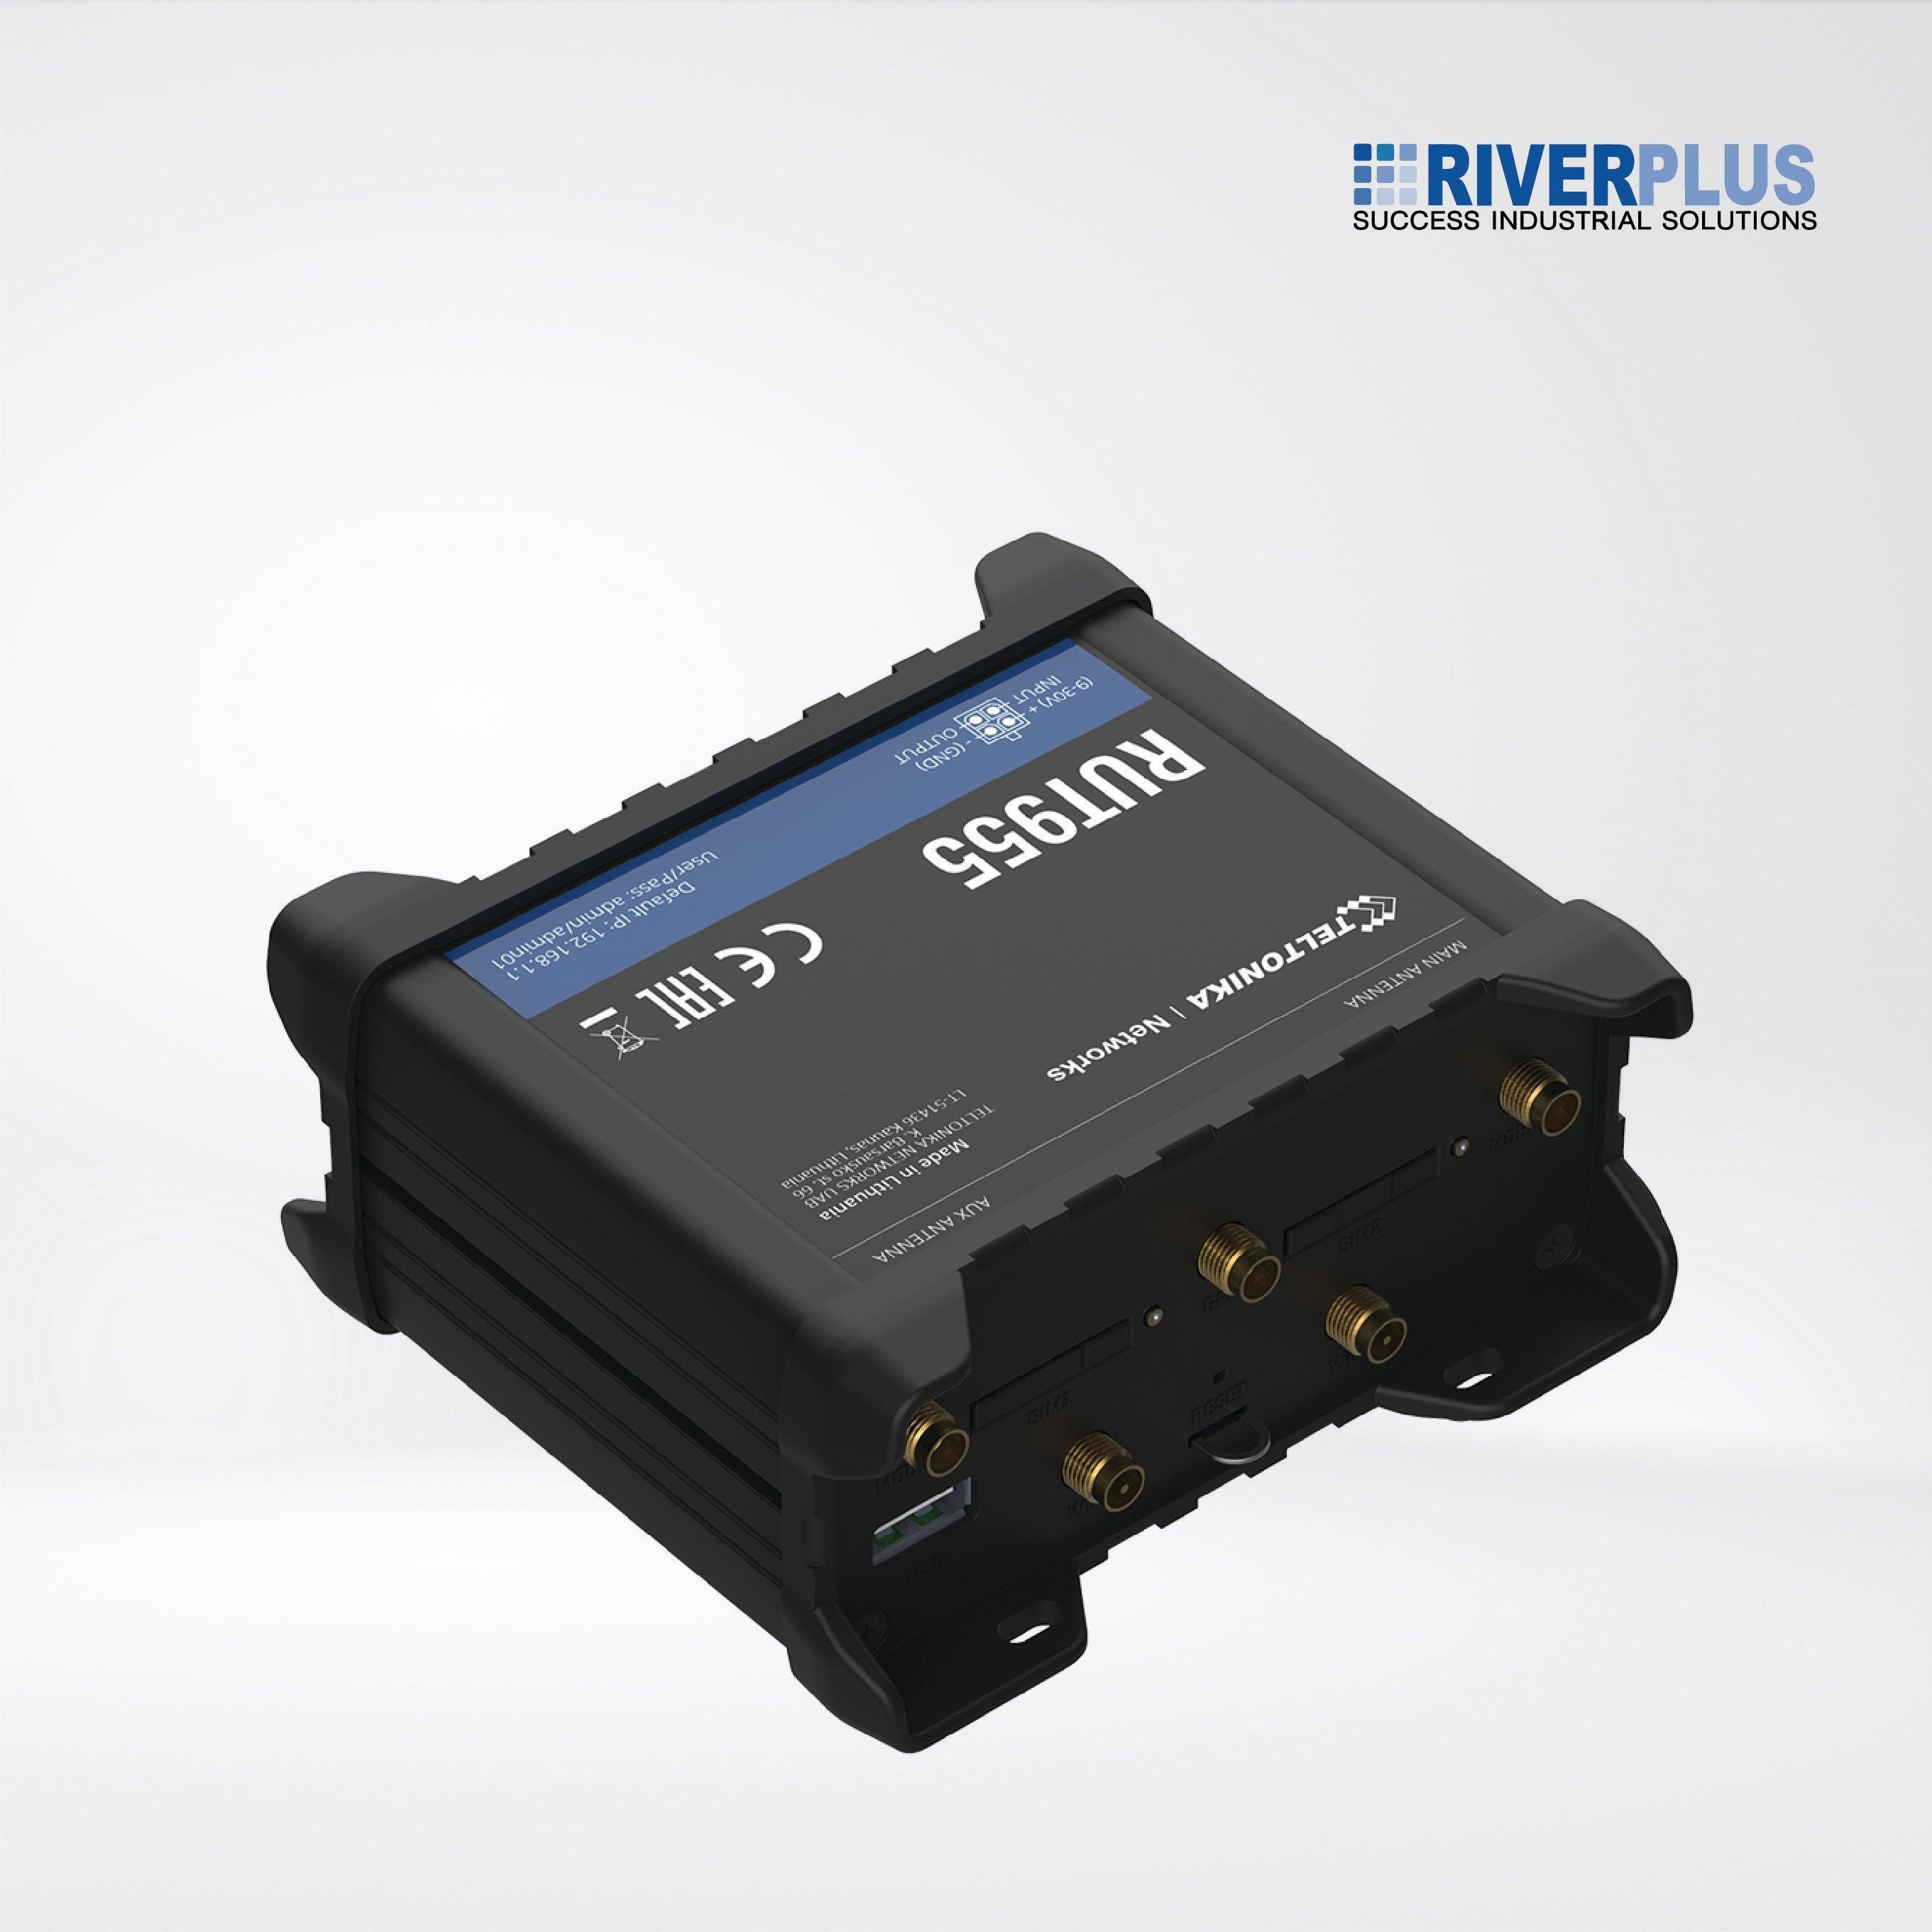 RUT955 Industrial 4G LTE/Wi-Fi/Dual-SIM/RS232/RS485 - Riverplus